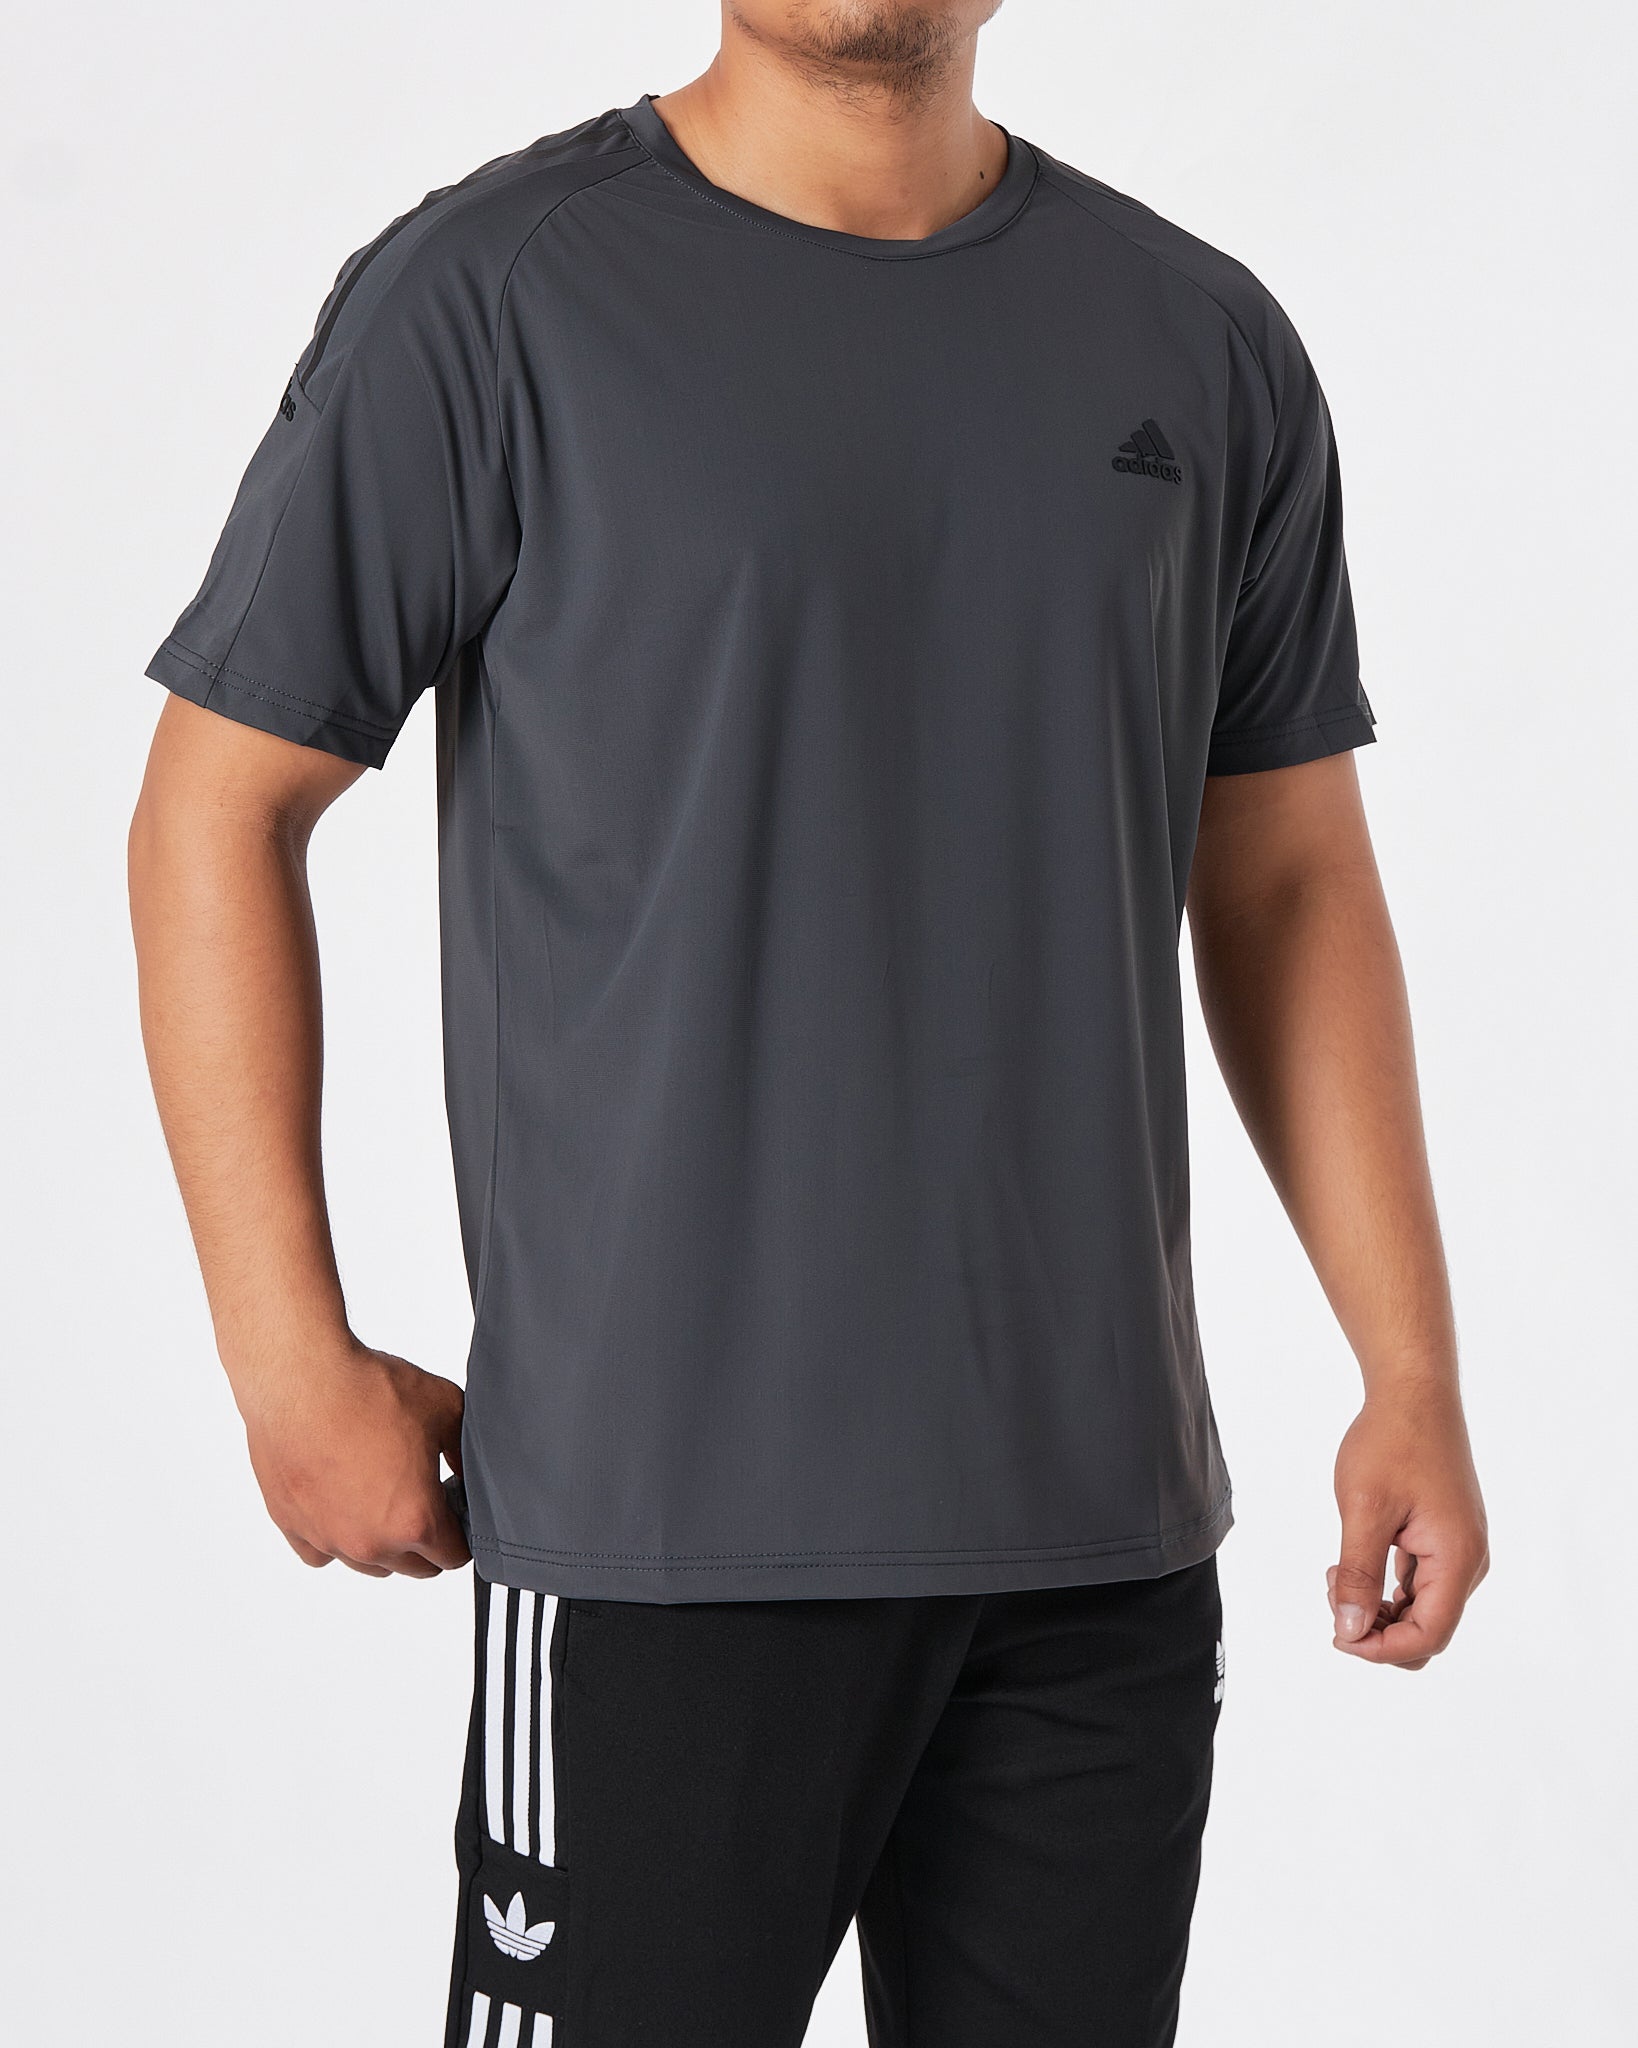 ADI Striped Men Grey Sport T-Shirt 13.90